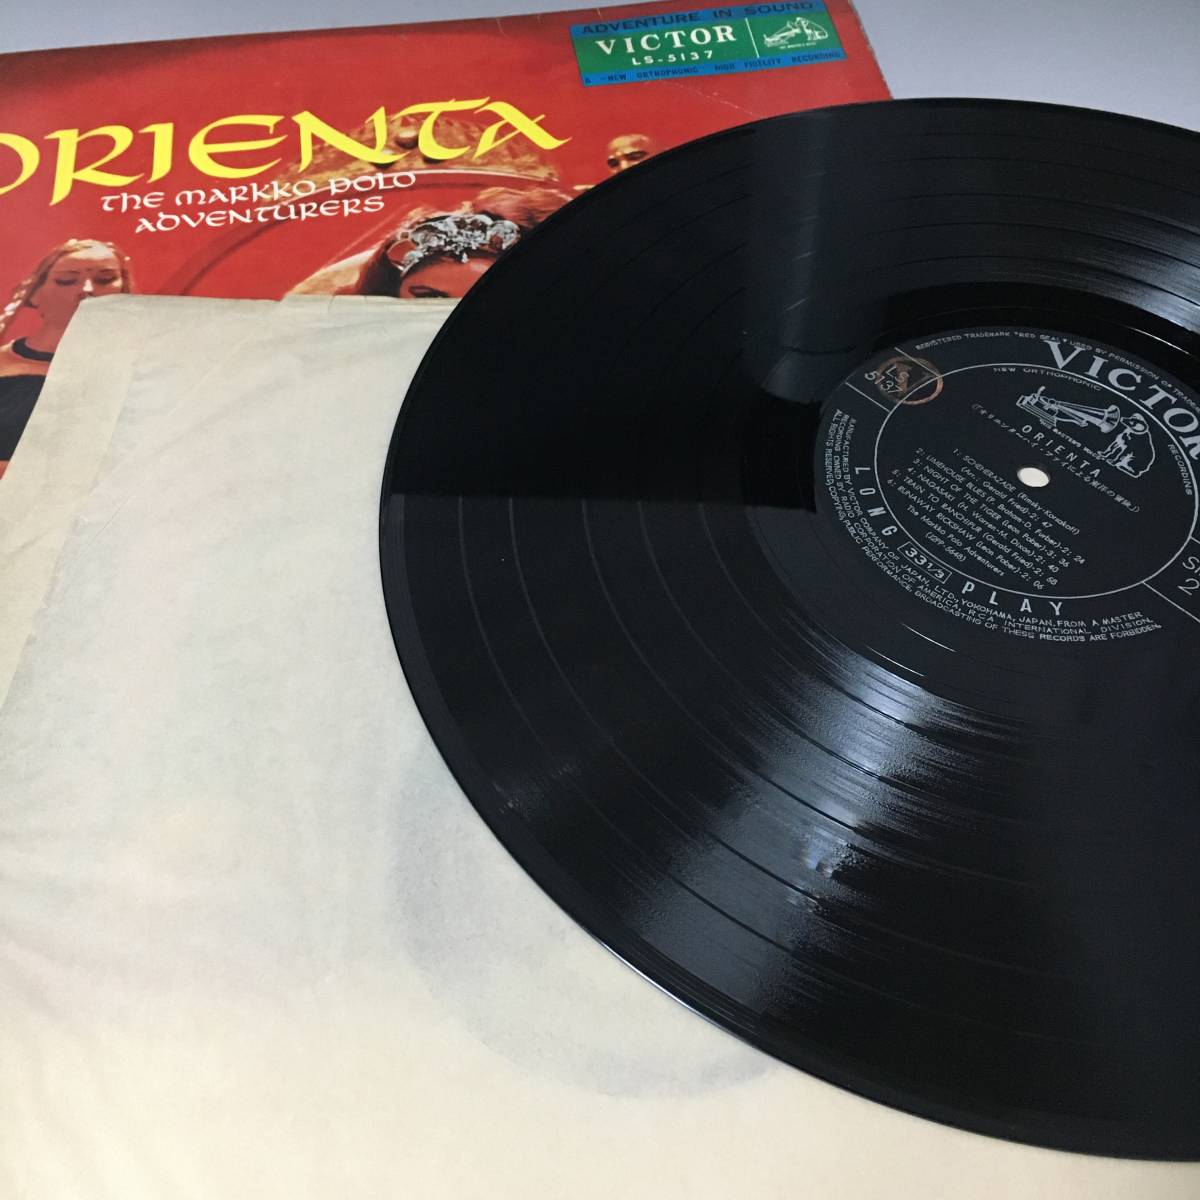 ut20/64 LP/Markko Polo Adventures「Orienta」victor ls-5137 国内盤　レコード　※帯無〇●_画像3